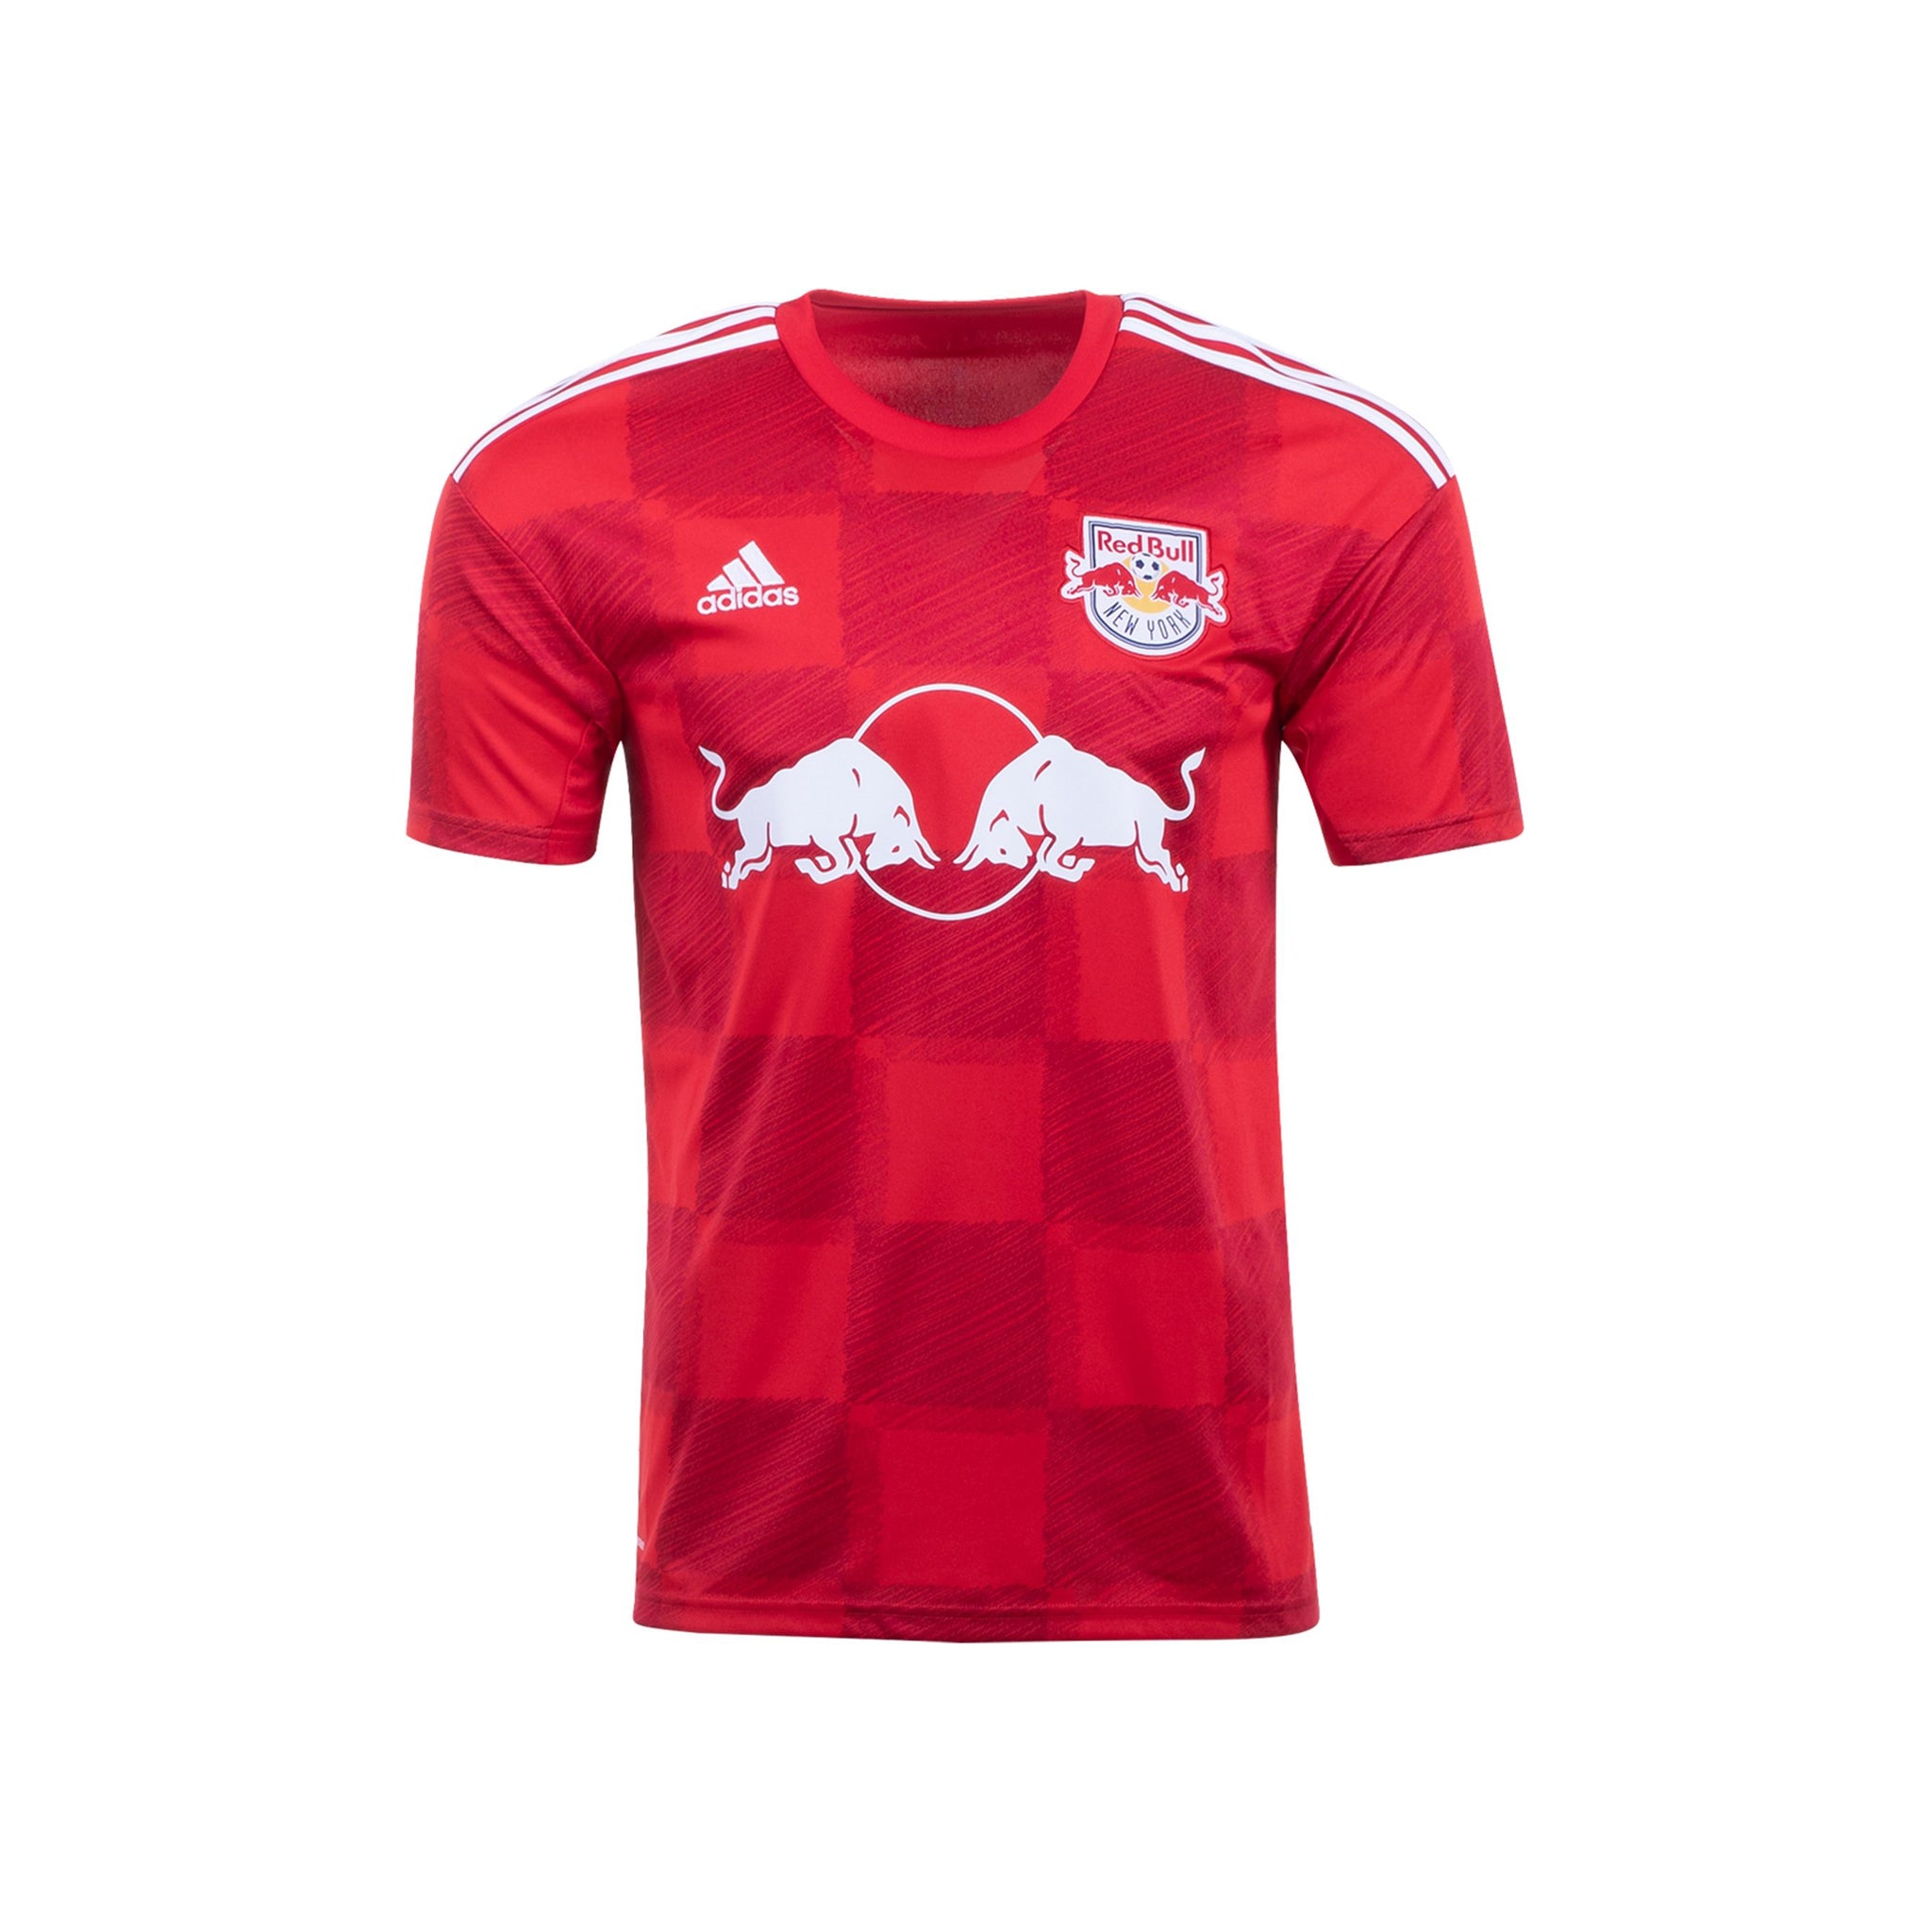 New Red Bull Salzburg 2022/23 Home & Away Shirt